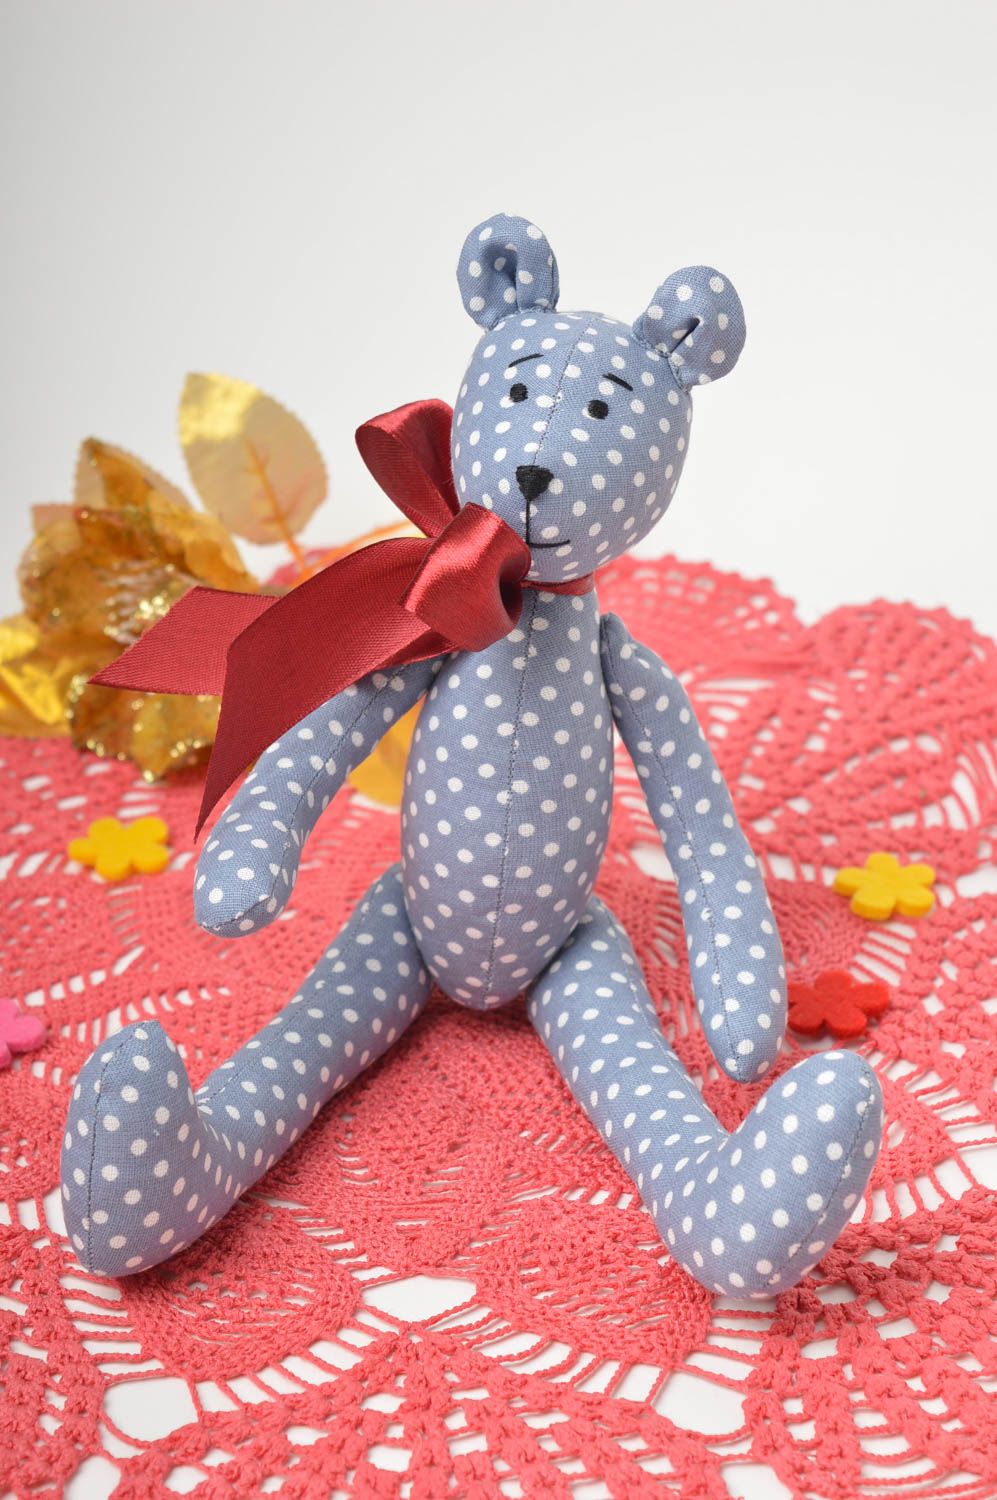 Decorative stuffed toy handmade toy for children soft toy interior decor ideas photo 1